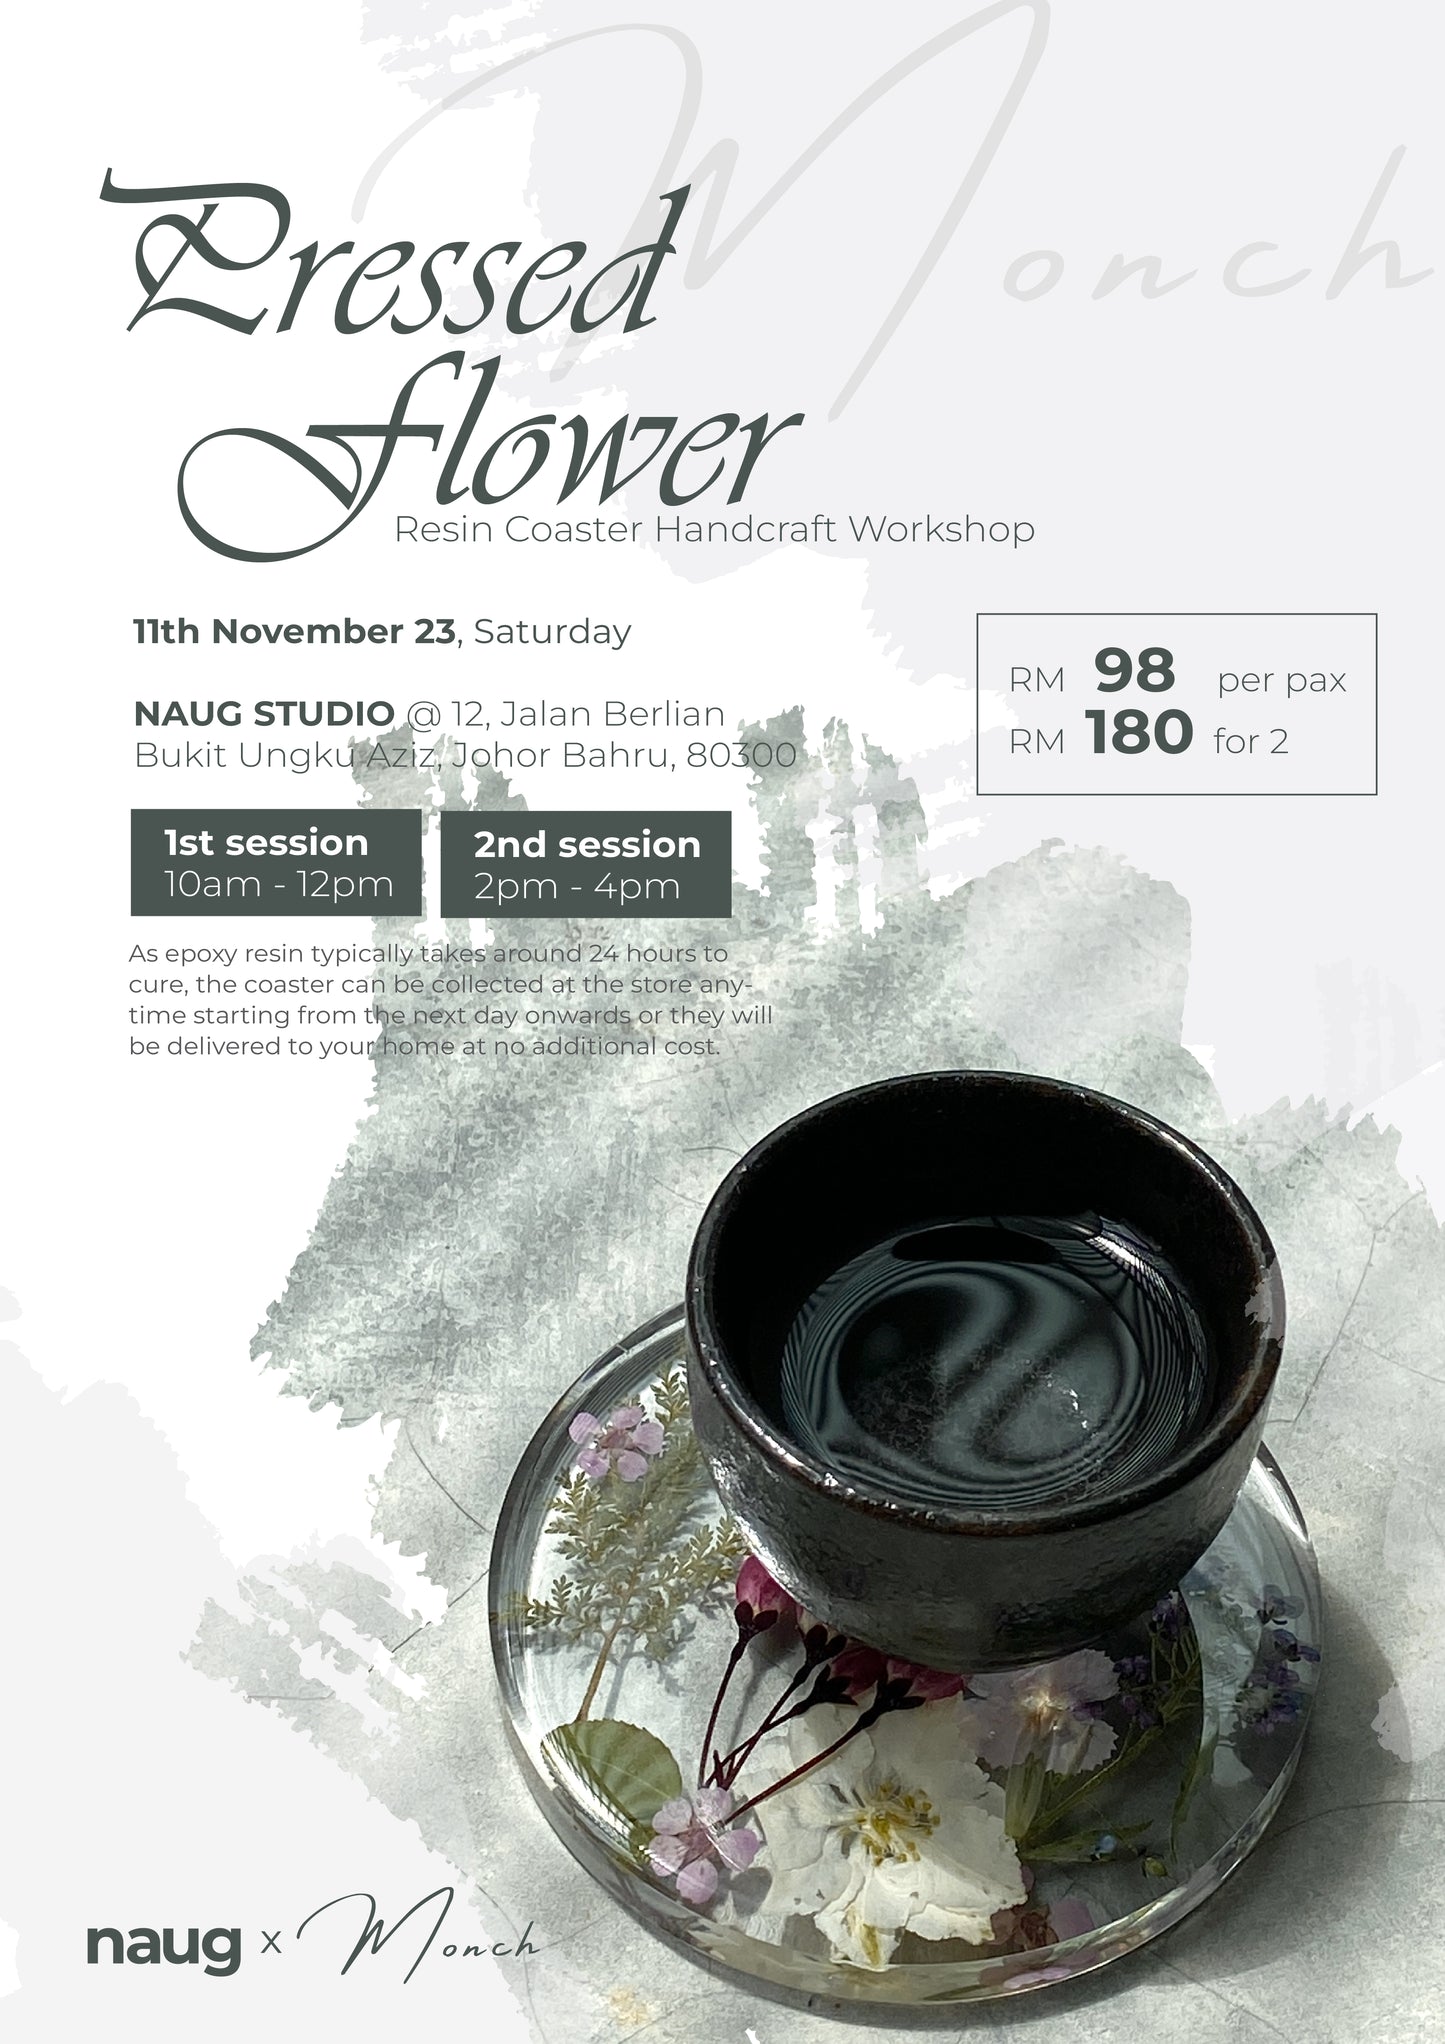 [11th NOV] Pressed Flower Resin Coaster Workshop by MONCH STUDIO